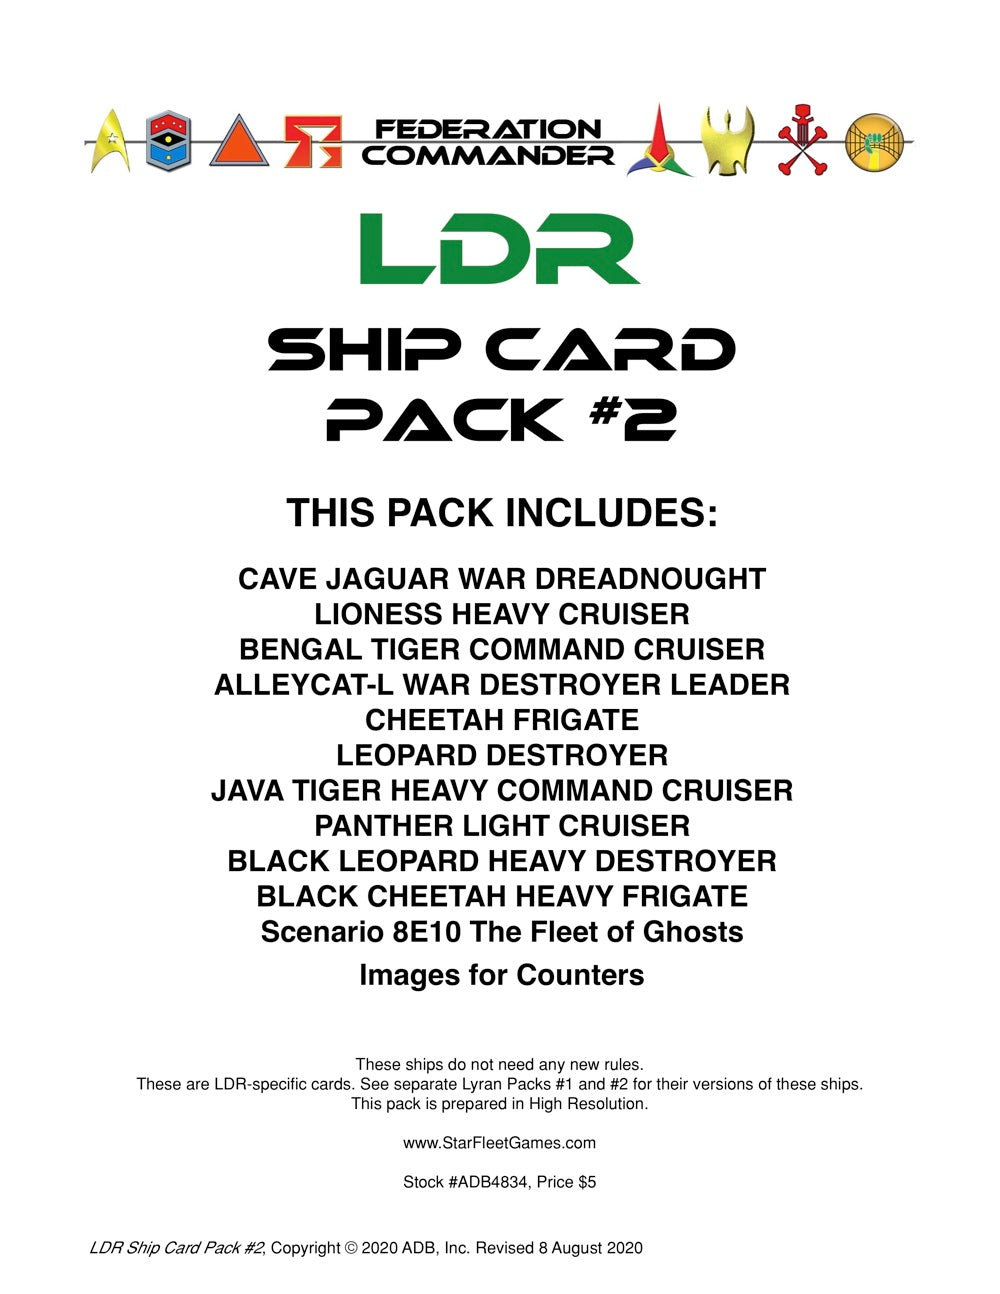 Federation Commander: LDR Ship Card Pack #2